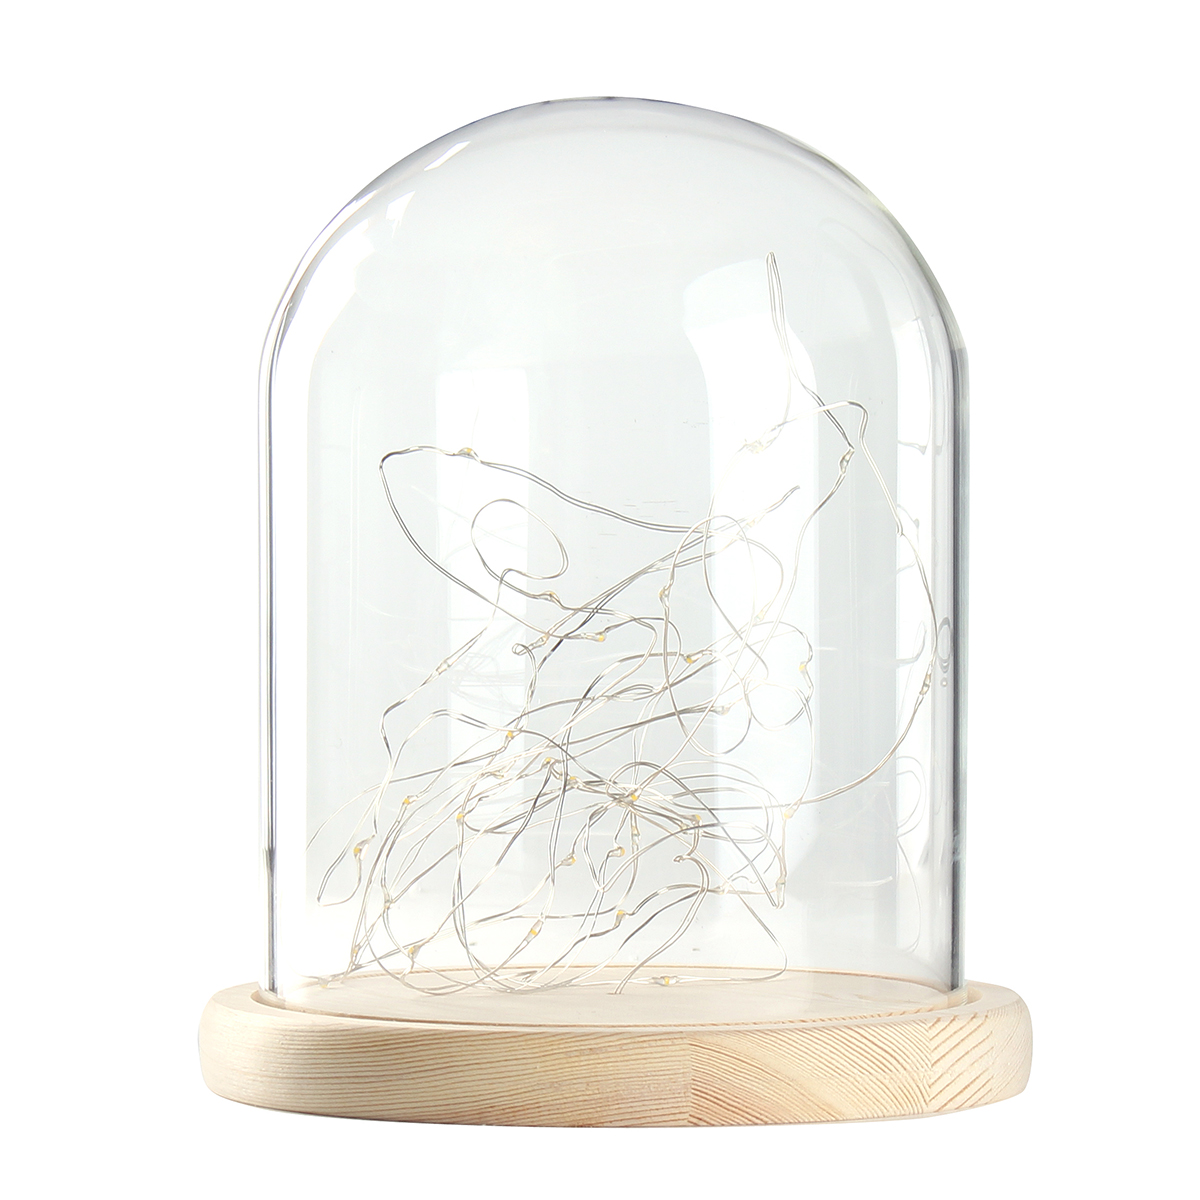 15185cm-Glass-Dome-Display-Jar-Clothe-Decor-Wooden-Base-w-Fairy-LED-Light-1363446-1